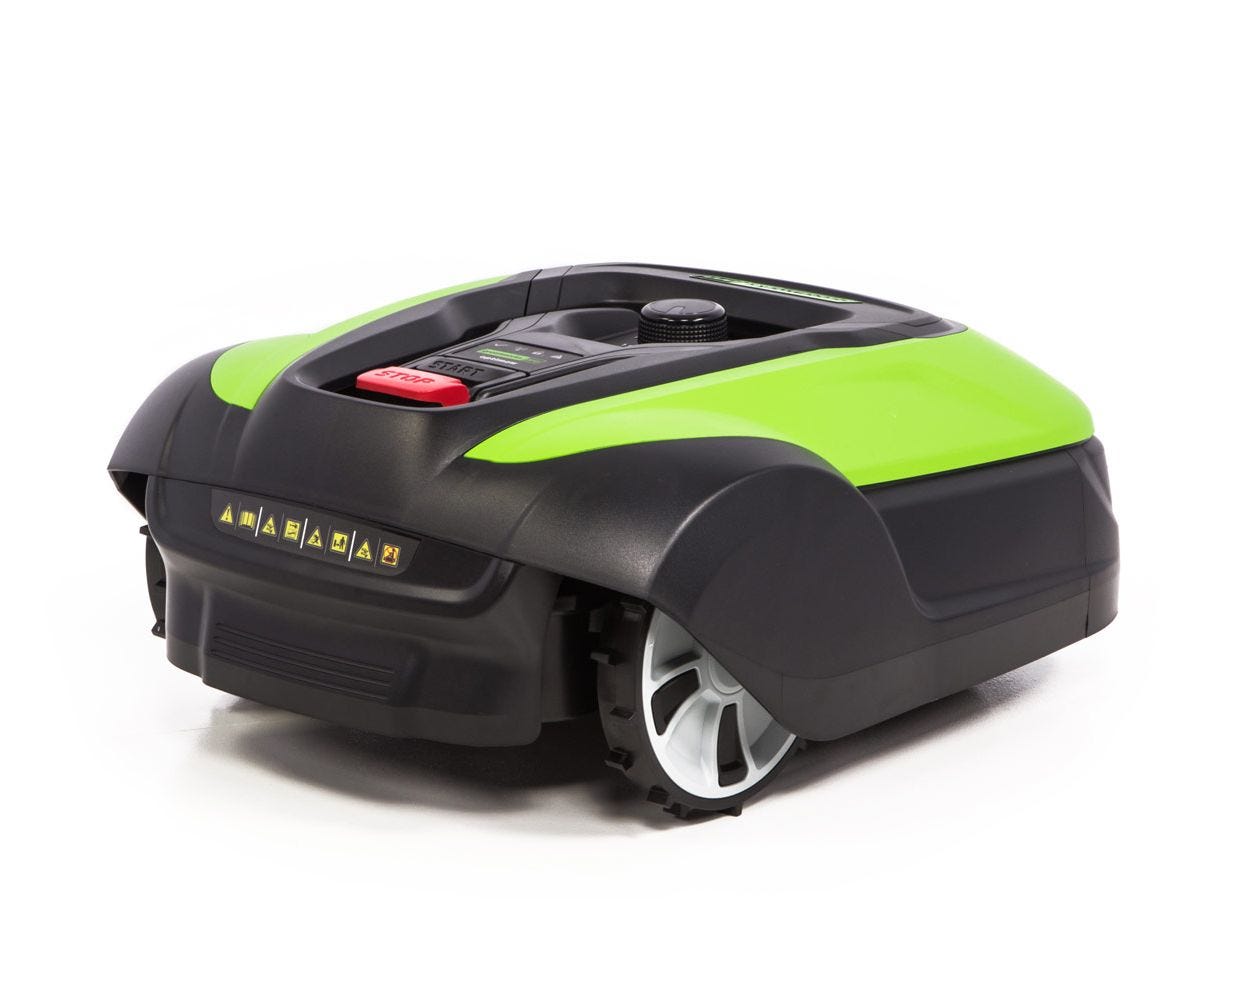 optimow 25 Robotic Lawn Mower | Greenworks Pro